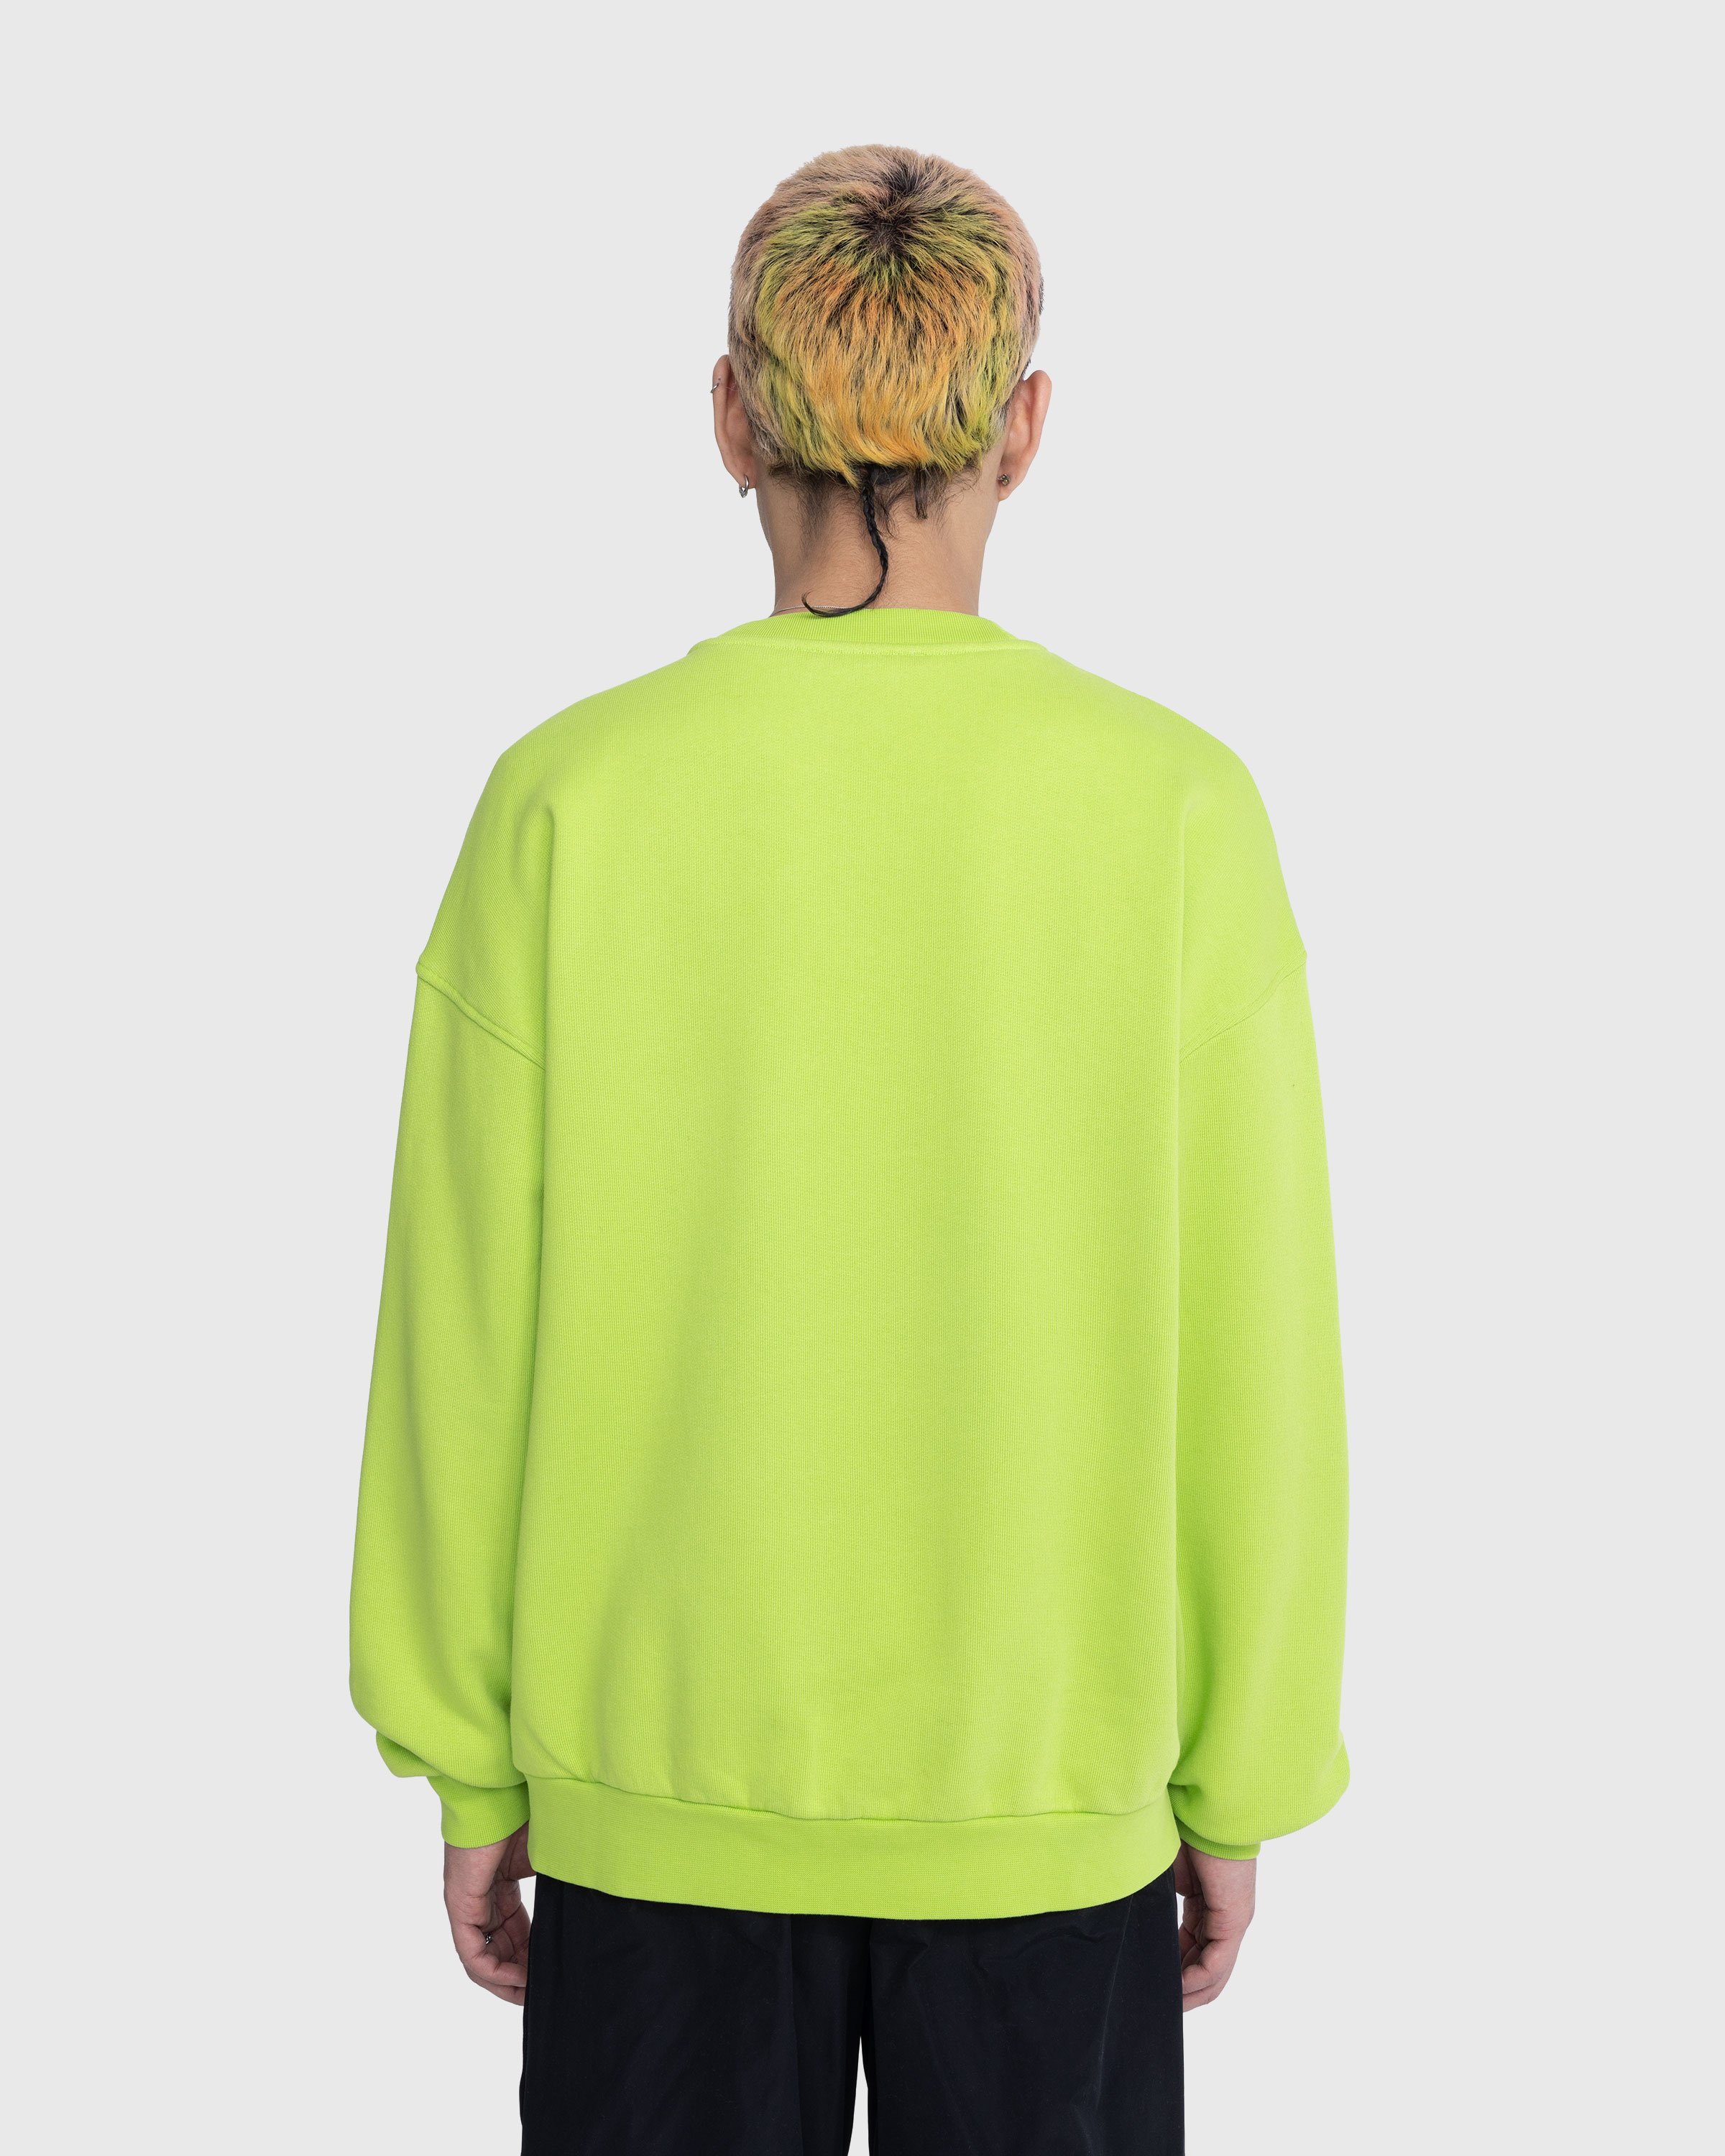 Acne Studios - Bubble Logo Crewneck Sweater Green - Clothing - Green - Image 4